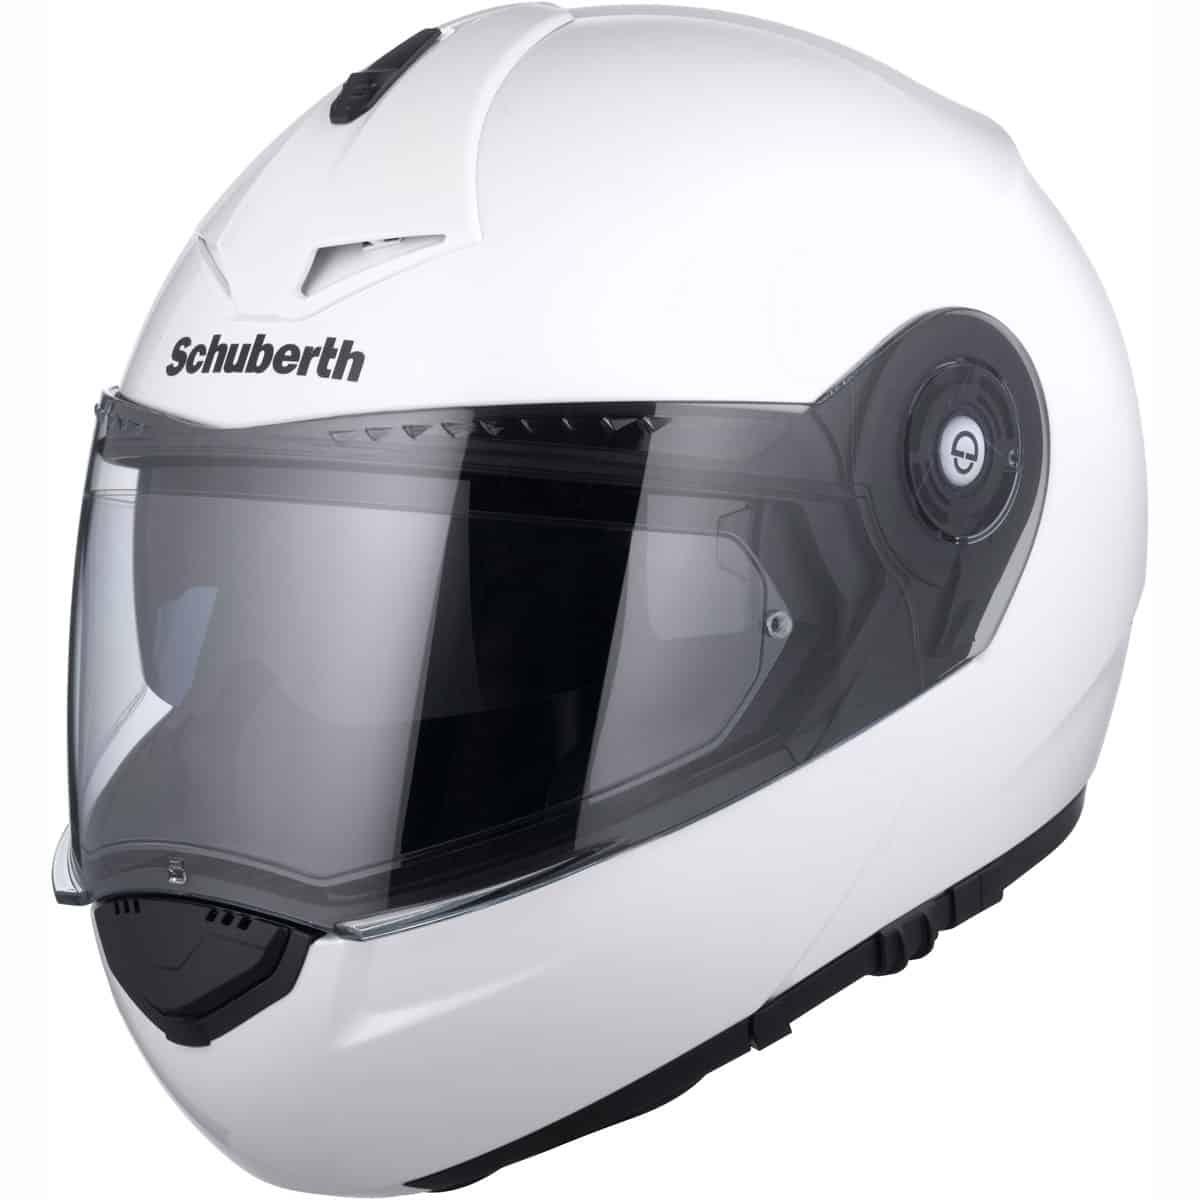 Schuberth C3 Pro Helmet - Gloss White - getgearedshop